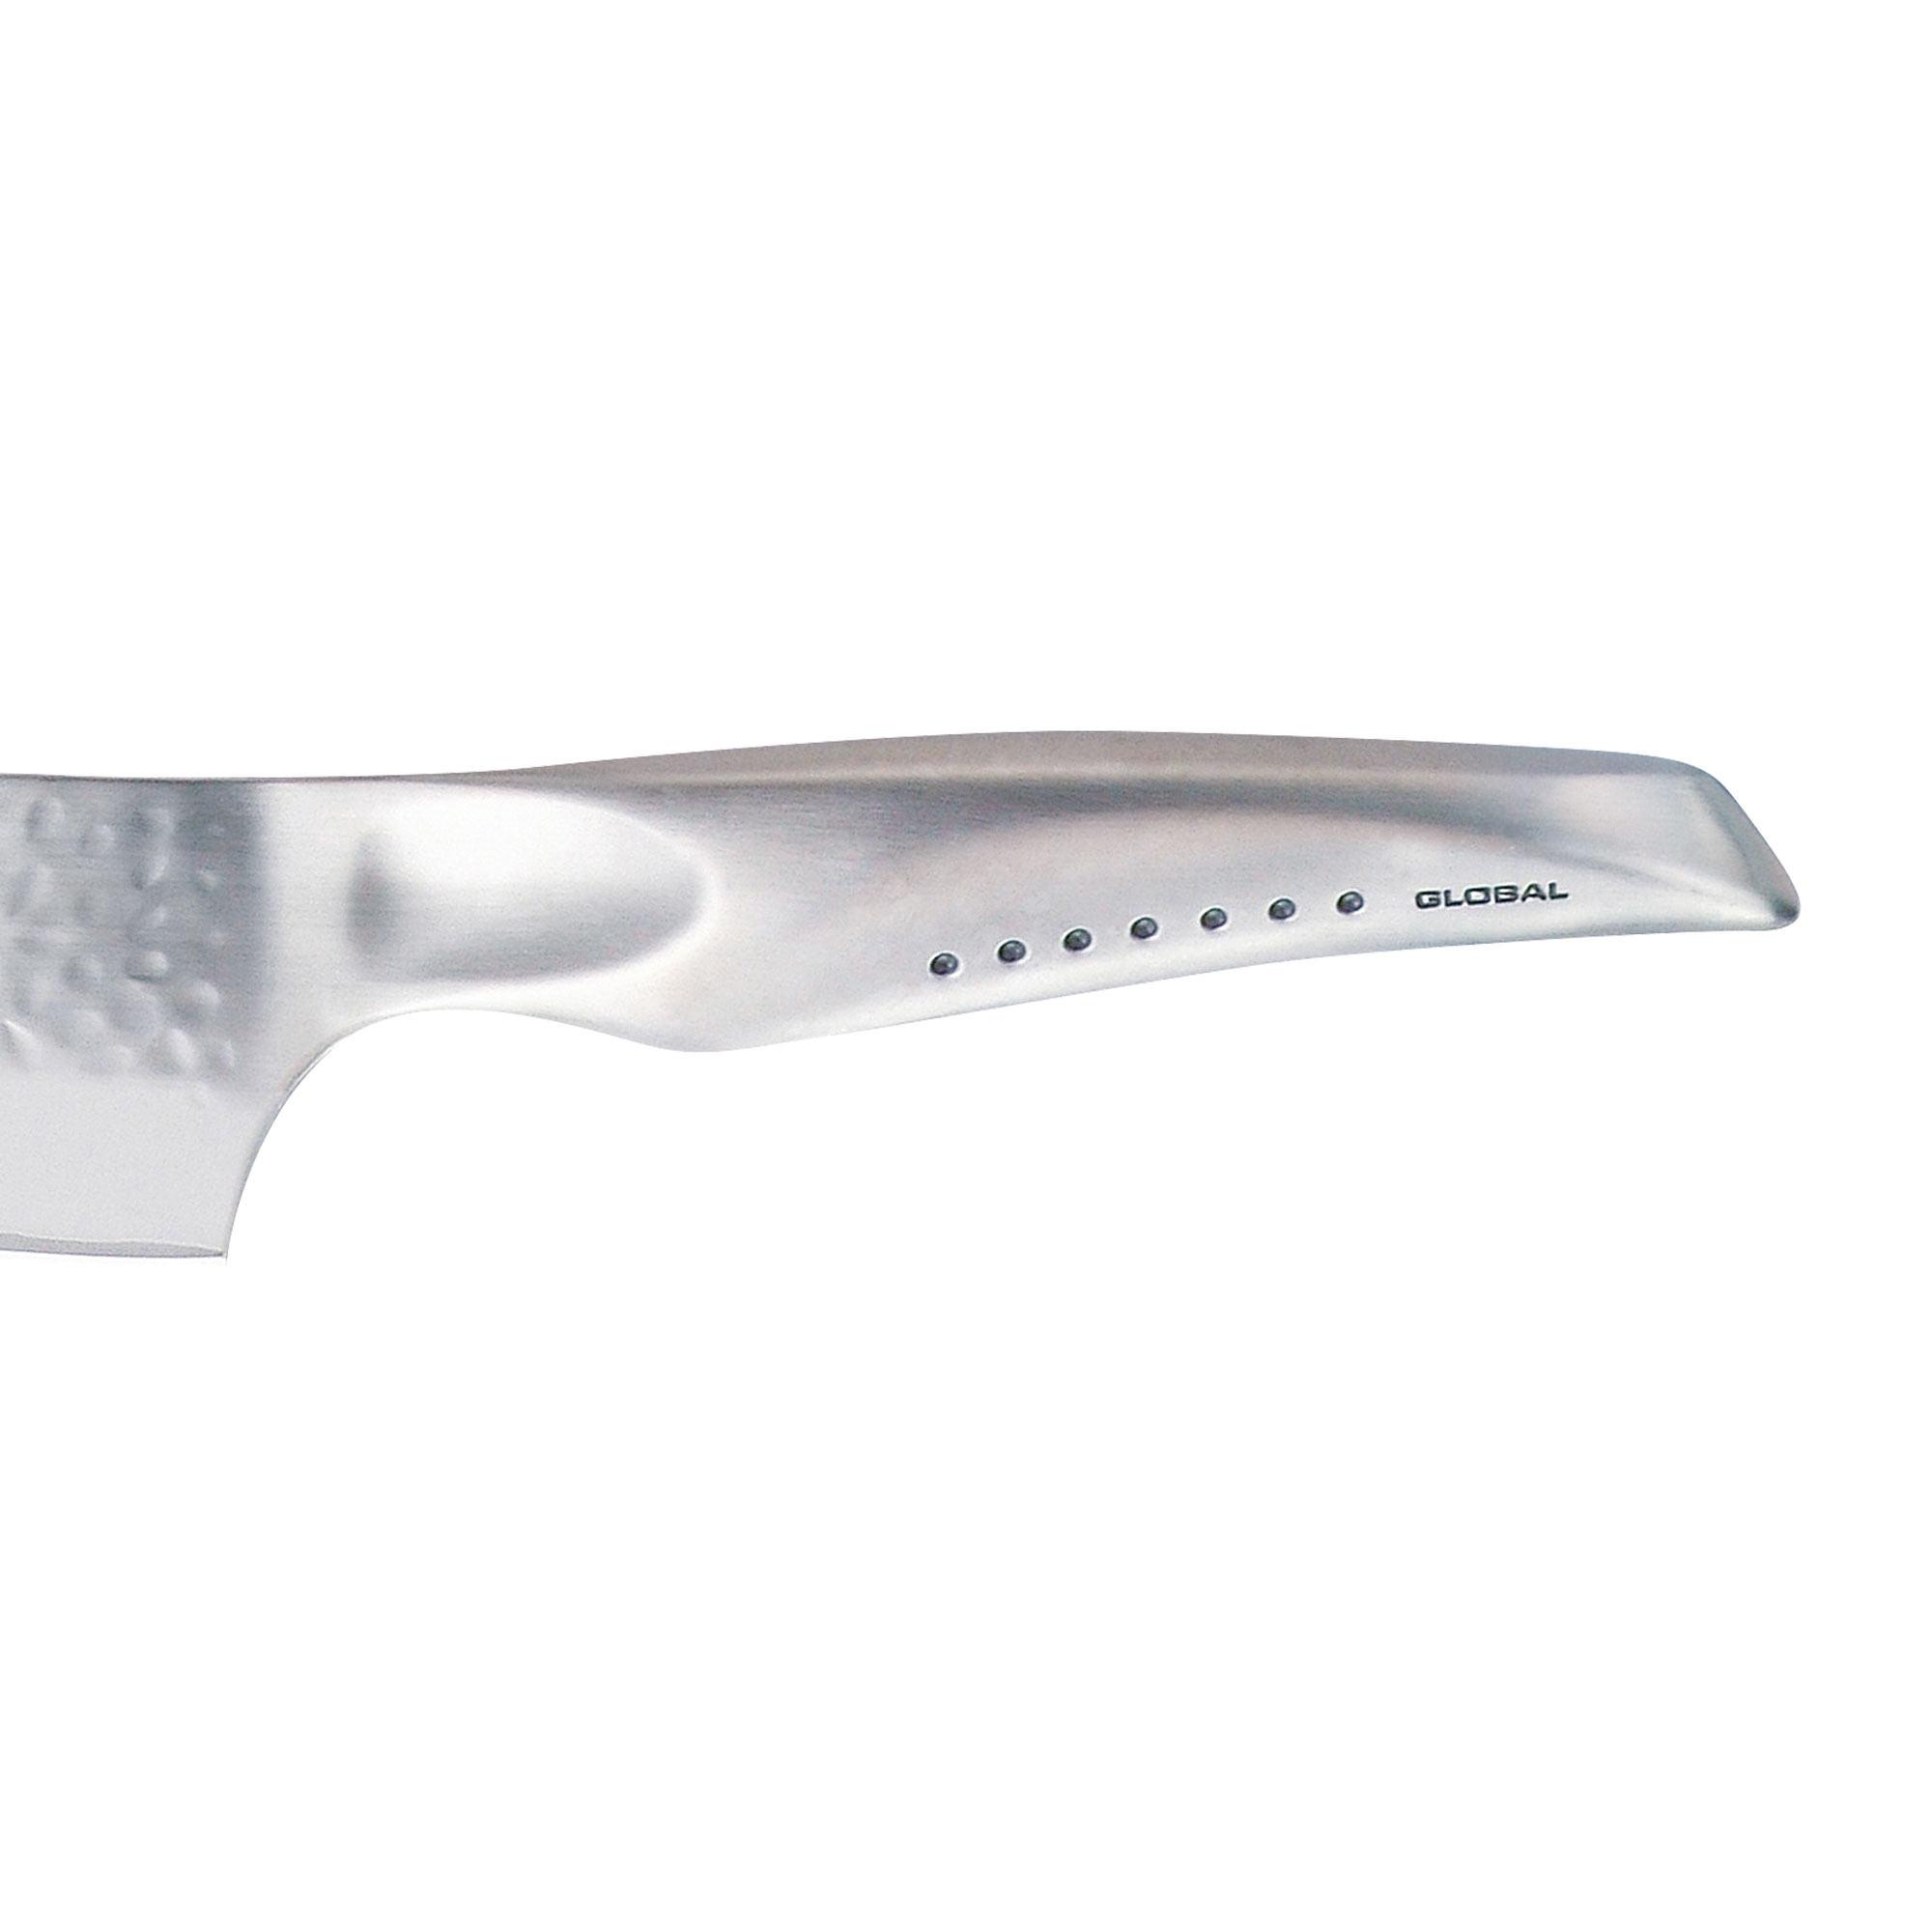 Global Sai Cook's Knife 25cm Image 3